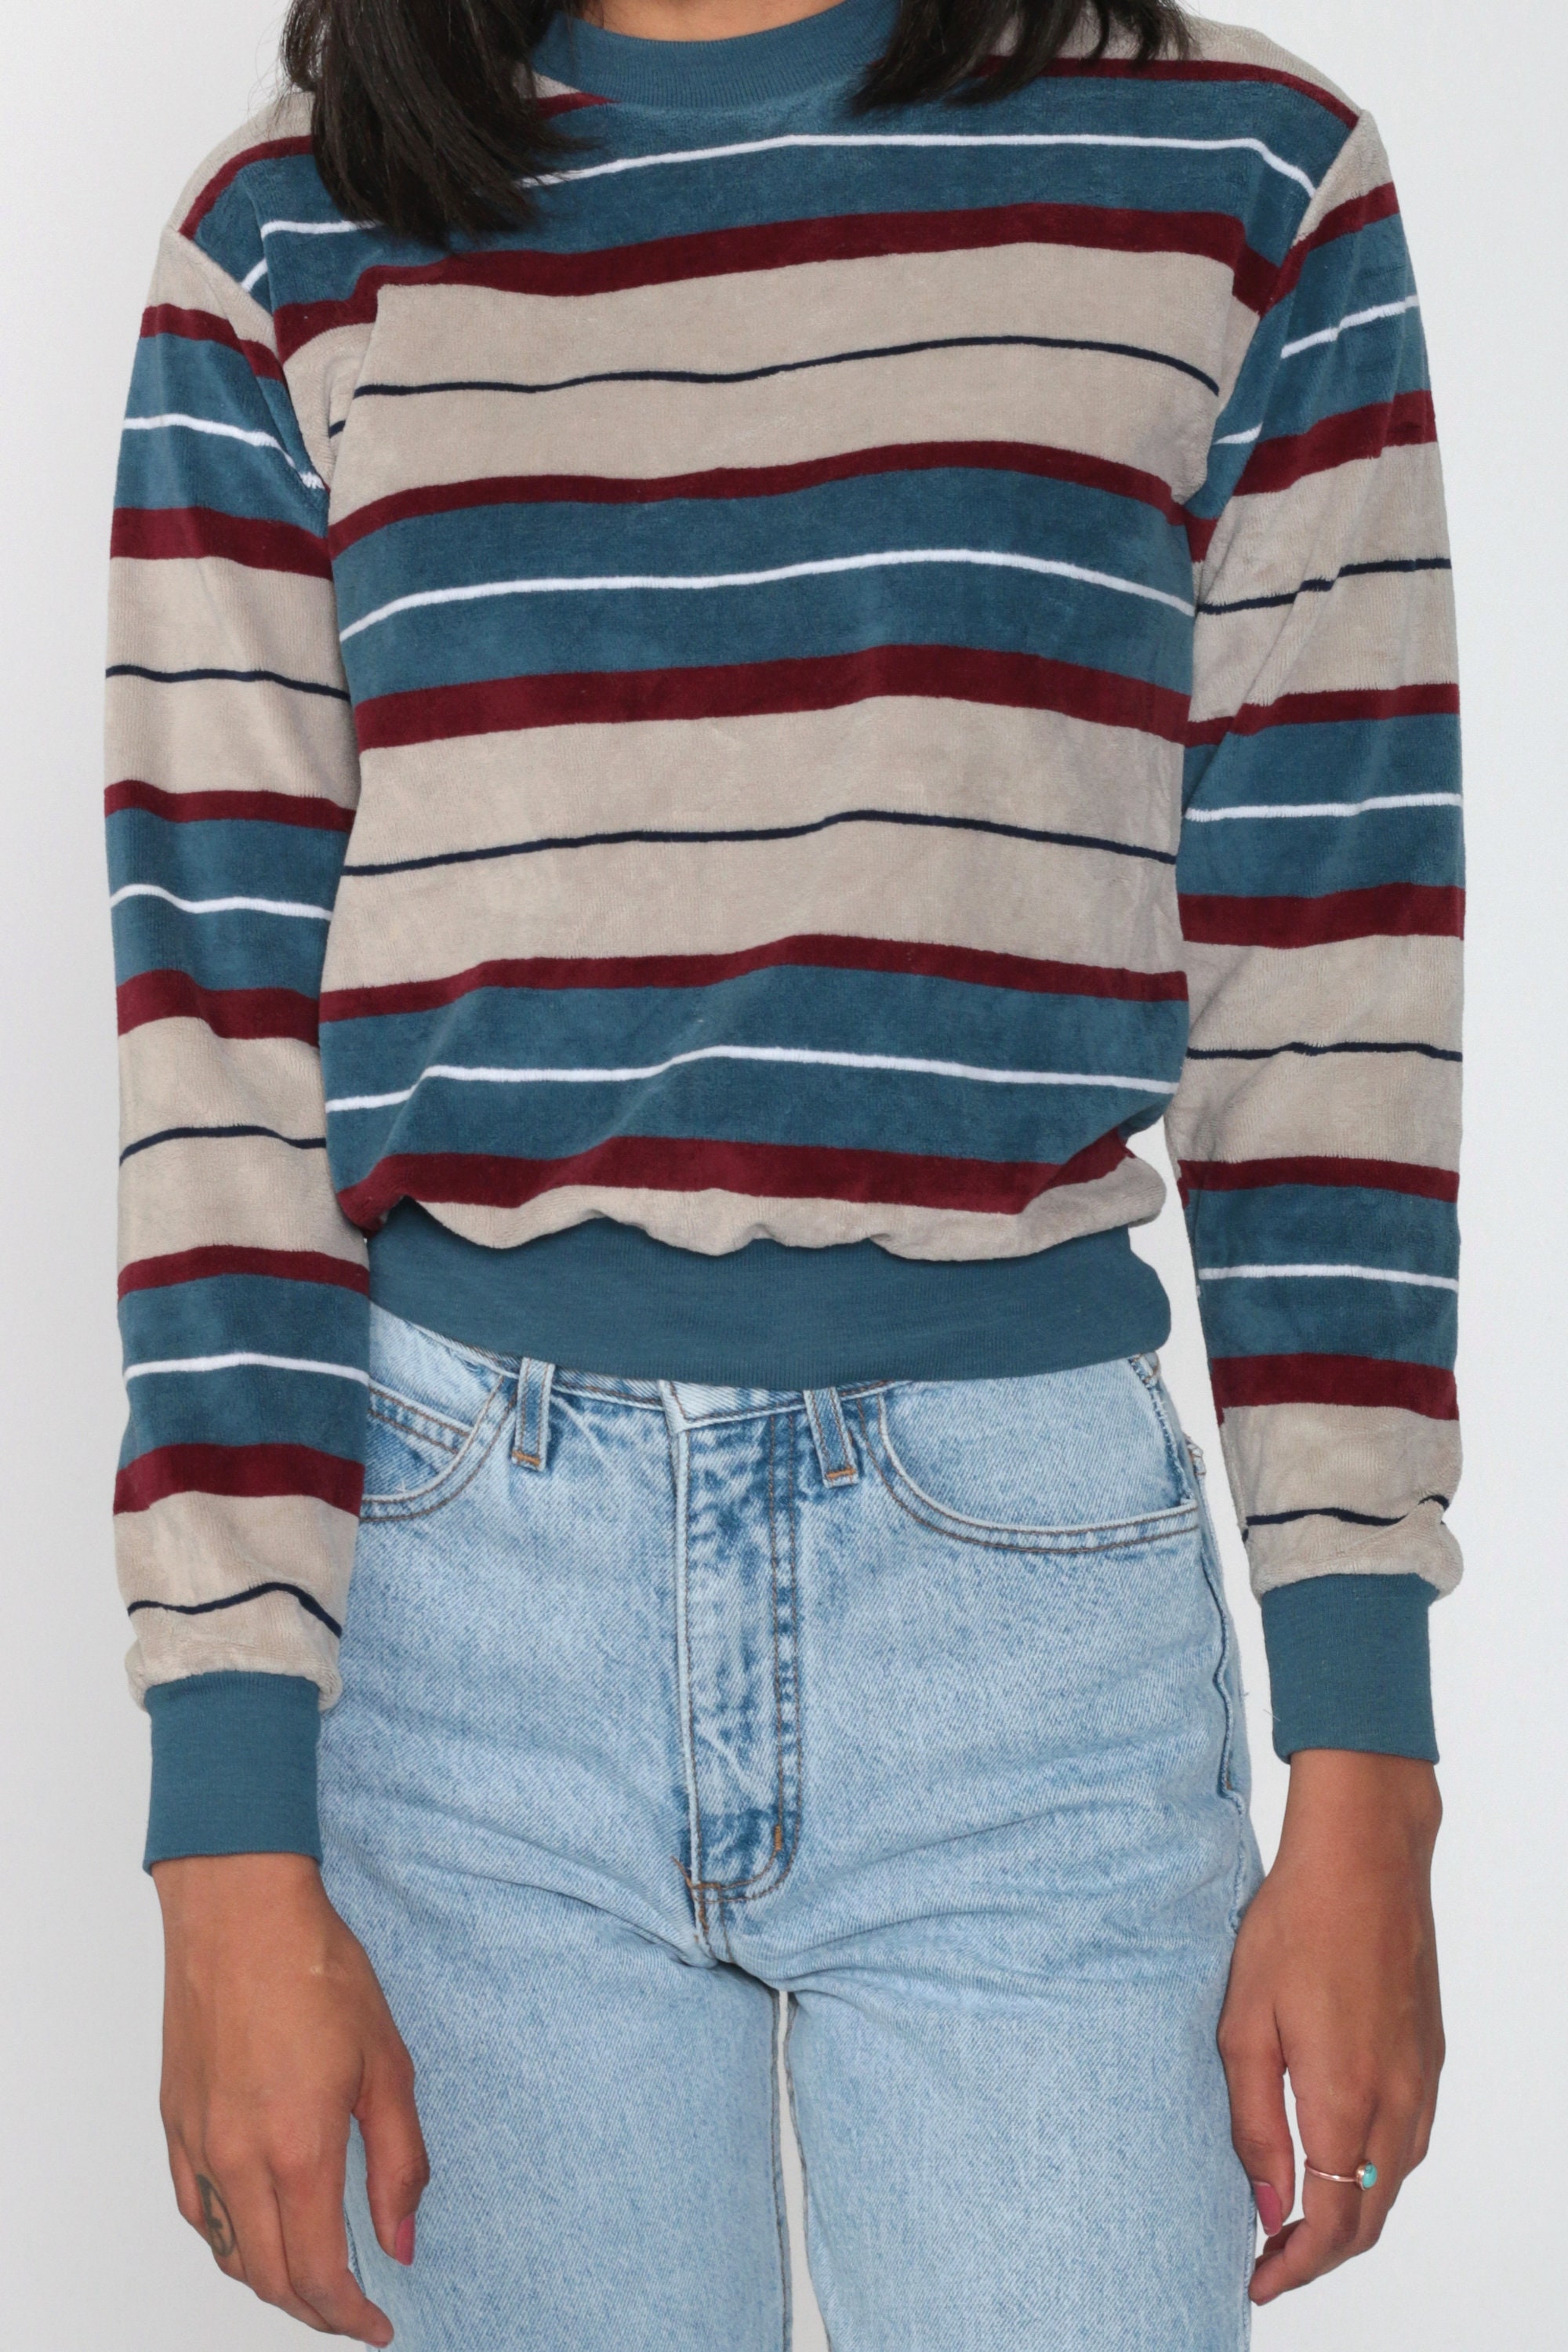 Striped Velour Sweatshirt 80s Sweatshirt Blue Taupe Top Campus Long